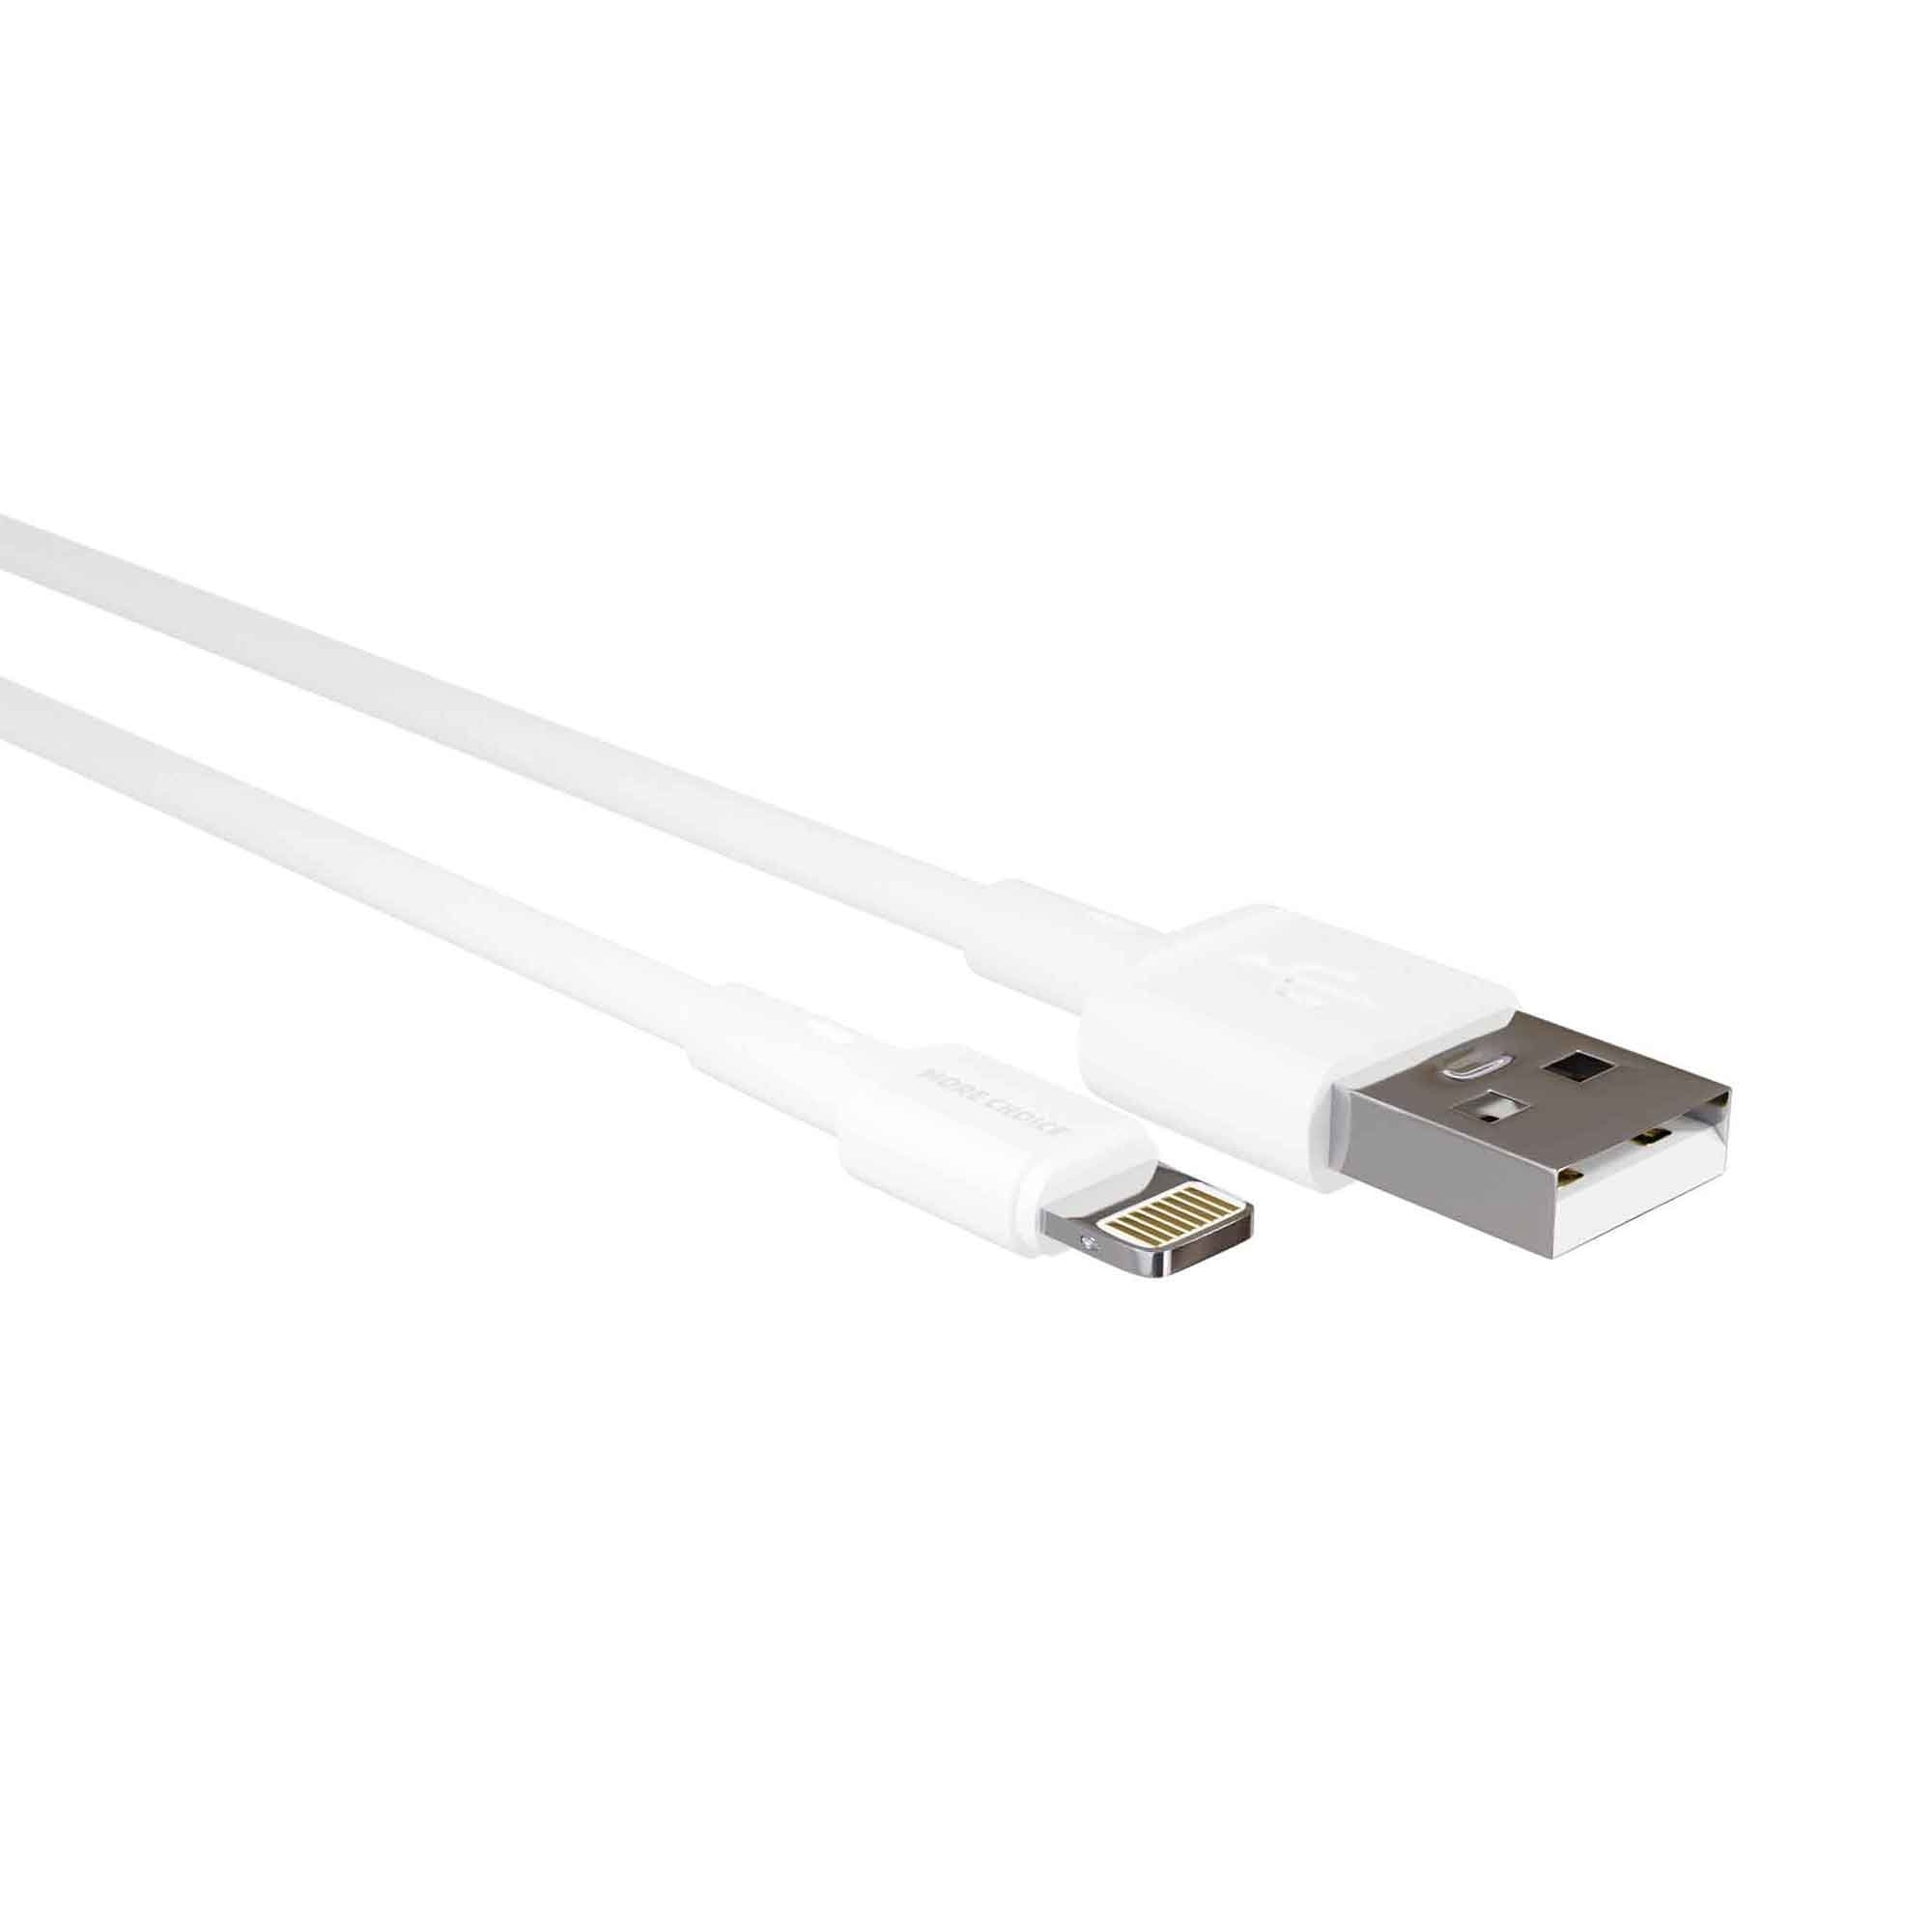 Дата-кабель More choice K14i TPE 2.0A Lightning 8-pin White USB дата кабель usb 2 0a для lightning 8 pin more choice k14i tpe 2м white